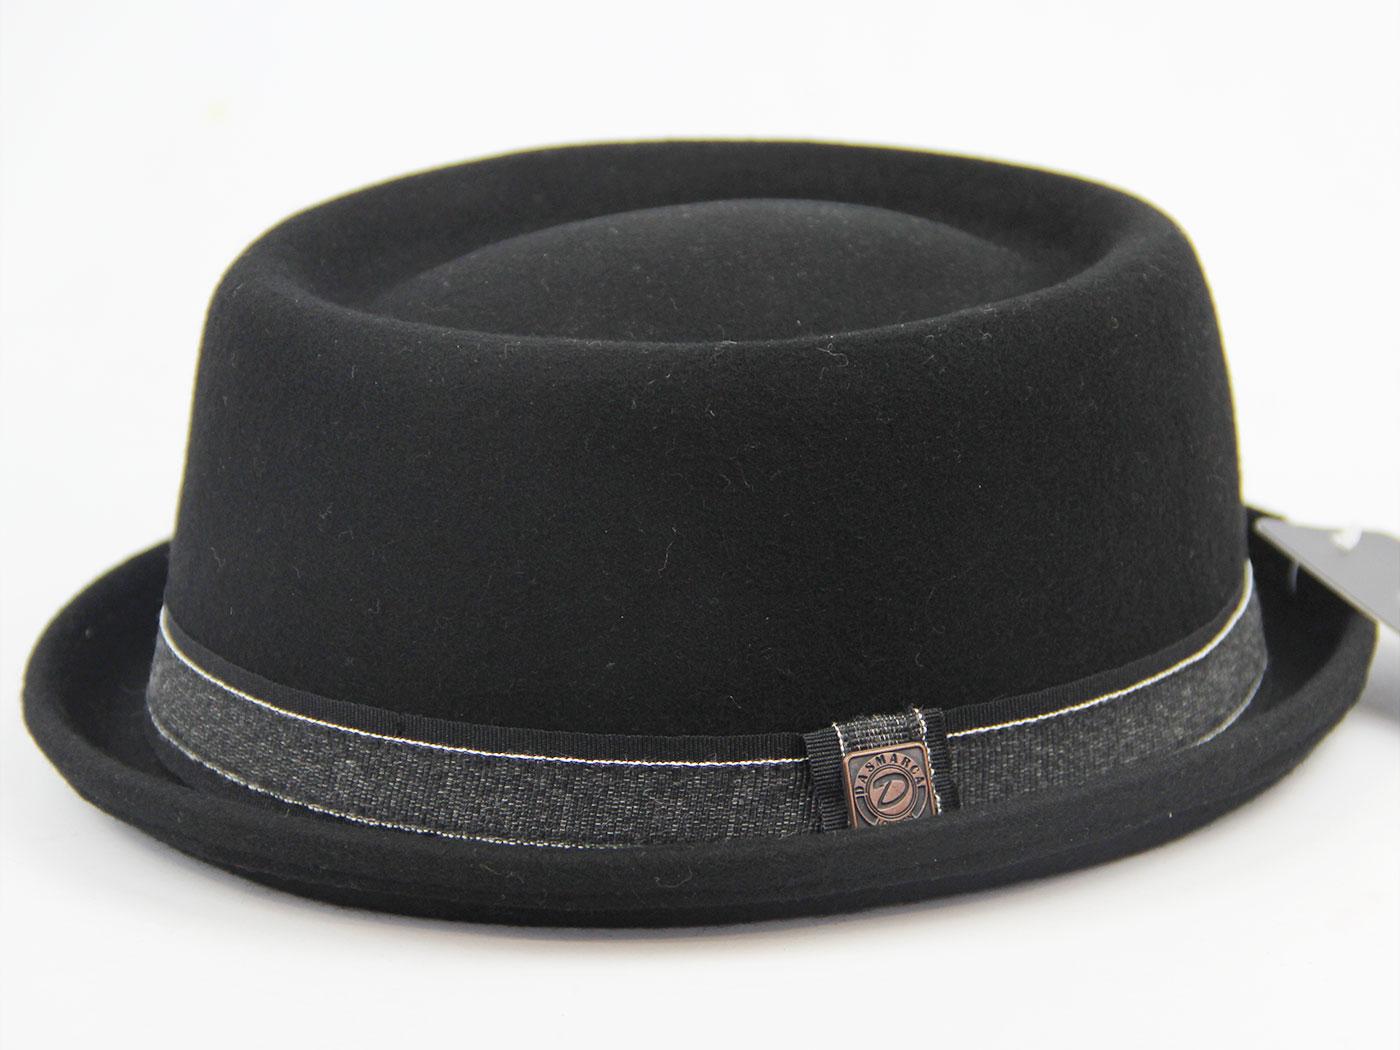 DASMARCA Jack Retro Mod Revival Wool Felt Porkpie Hat in Black